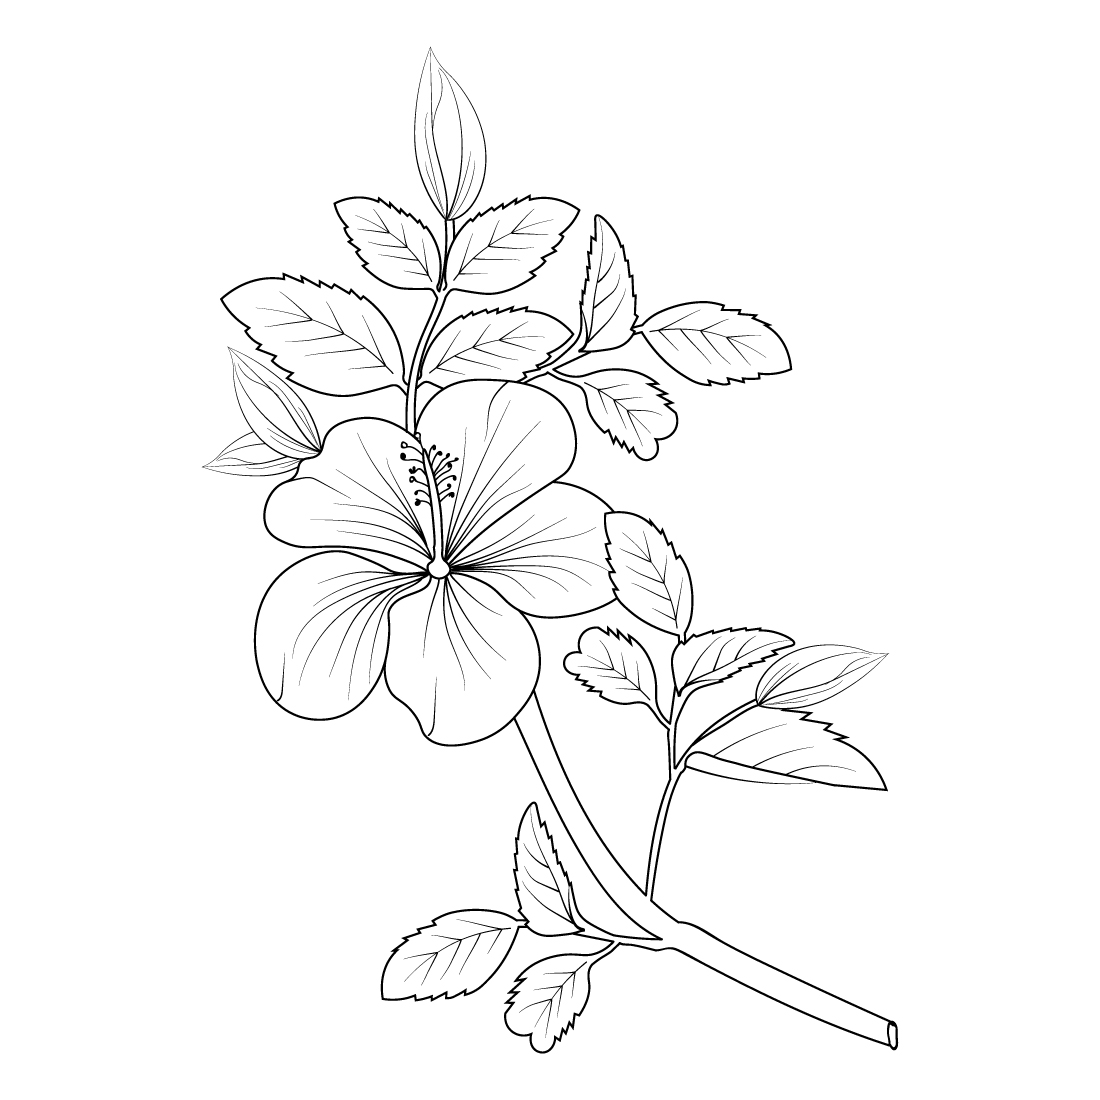 Botanical hibiscus flower drawing, hibiscus flower vector art, hibiscus flower pencil drawing cover image.